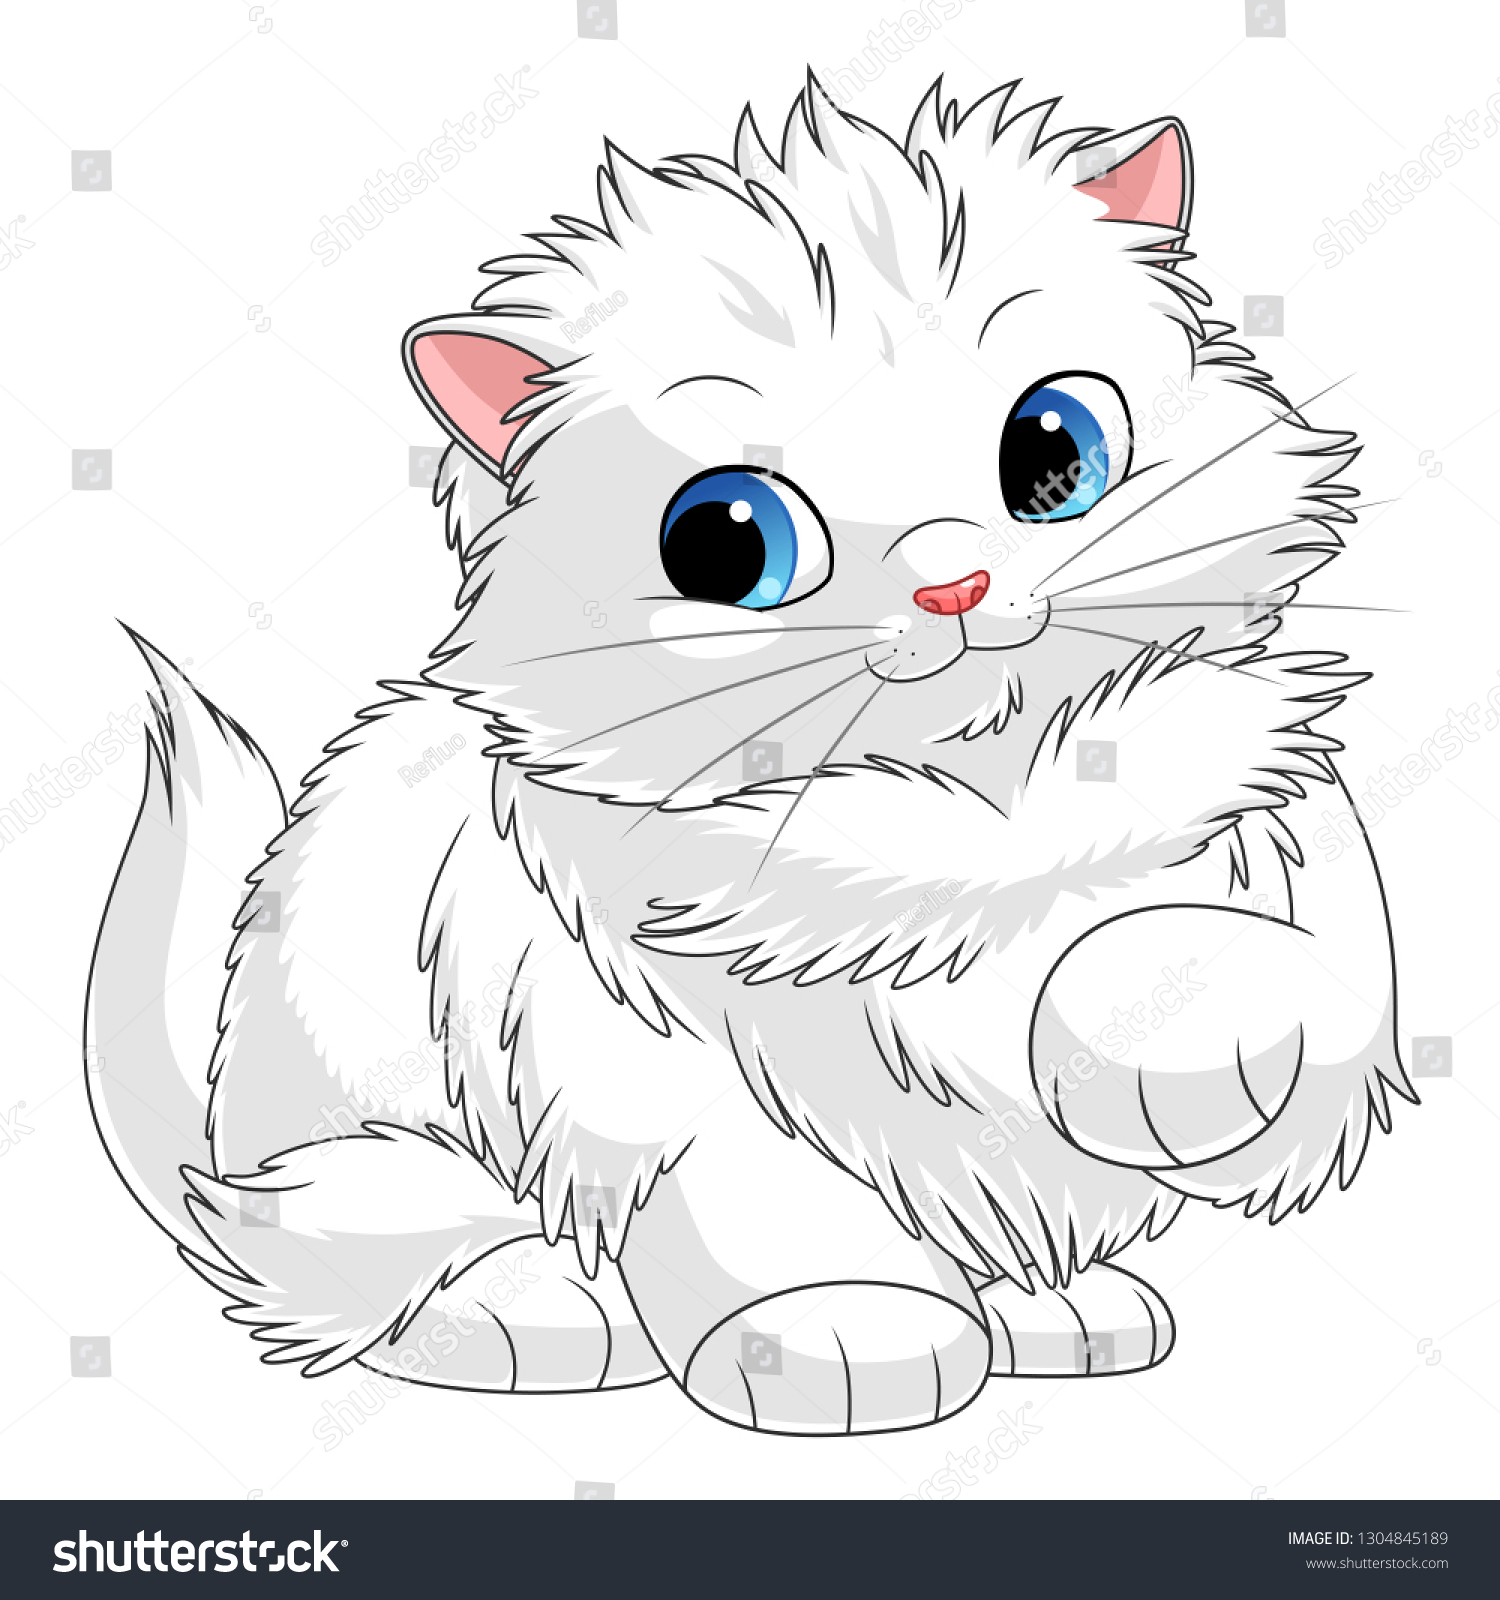 Kitten Images Cartoon - Cute Cartoon White Kitten Vector Image By C